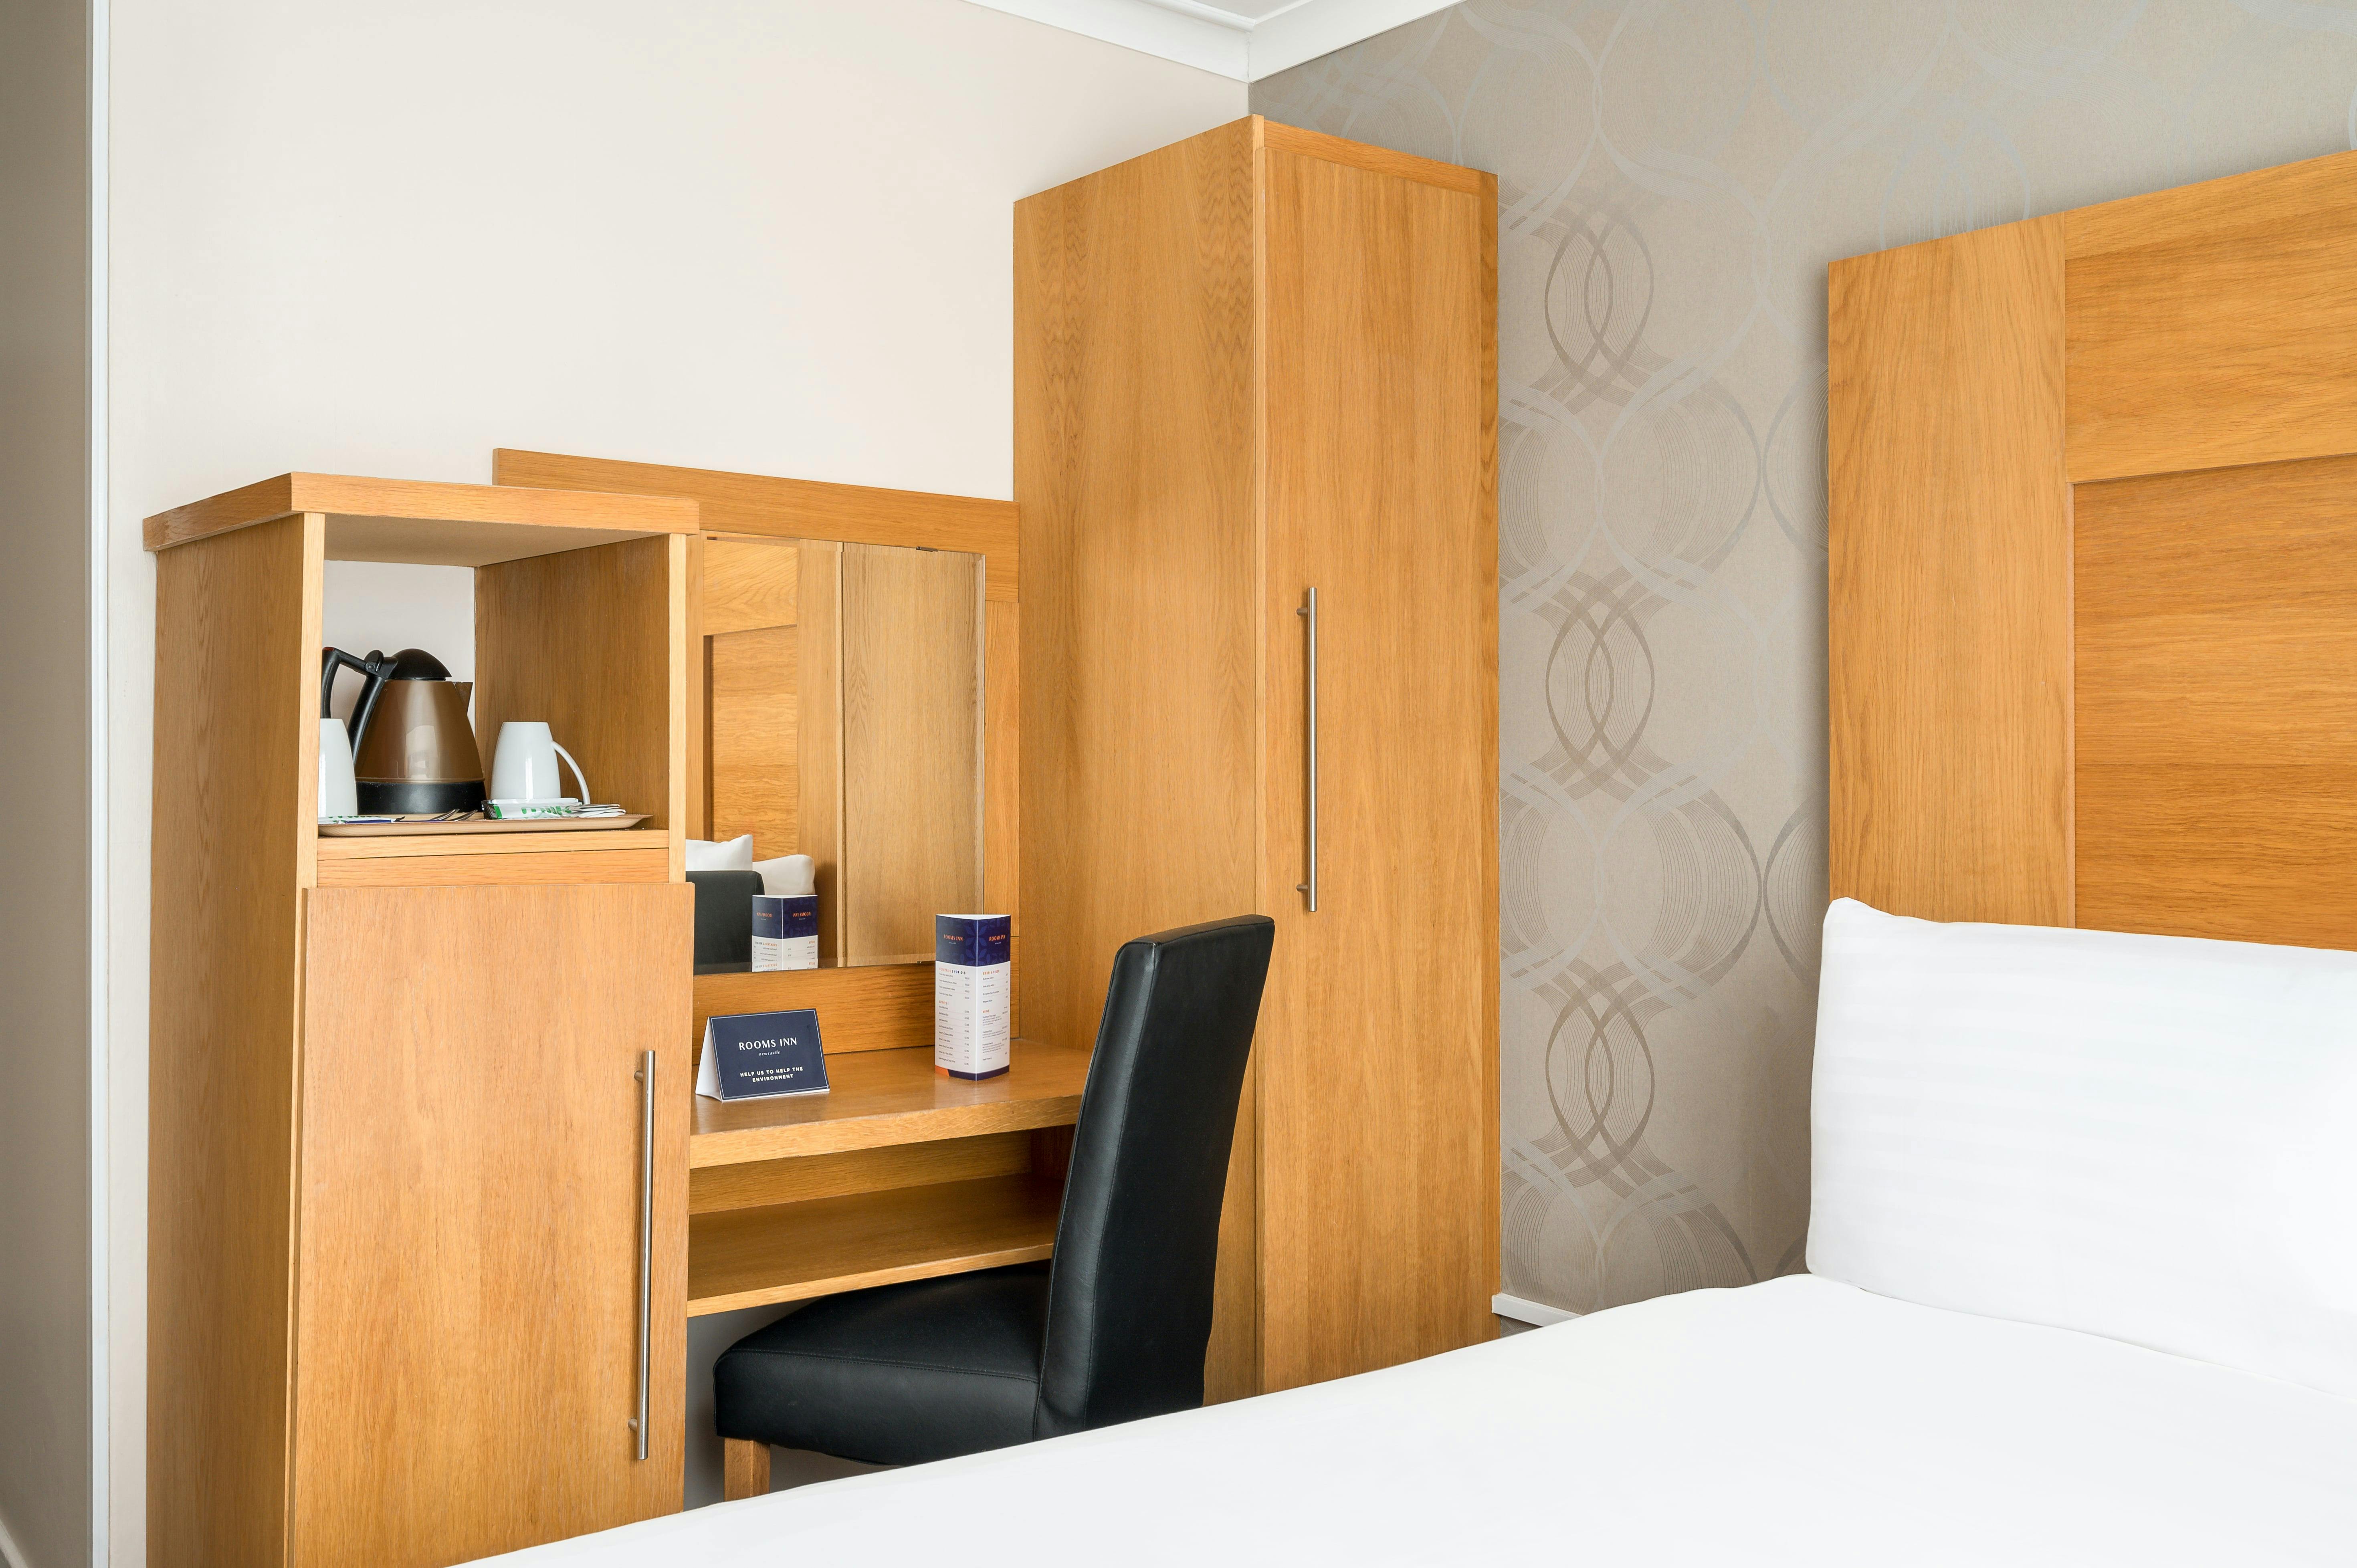 Rooms Inn Newcastle single room amenities view